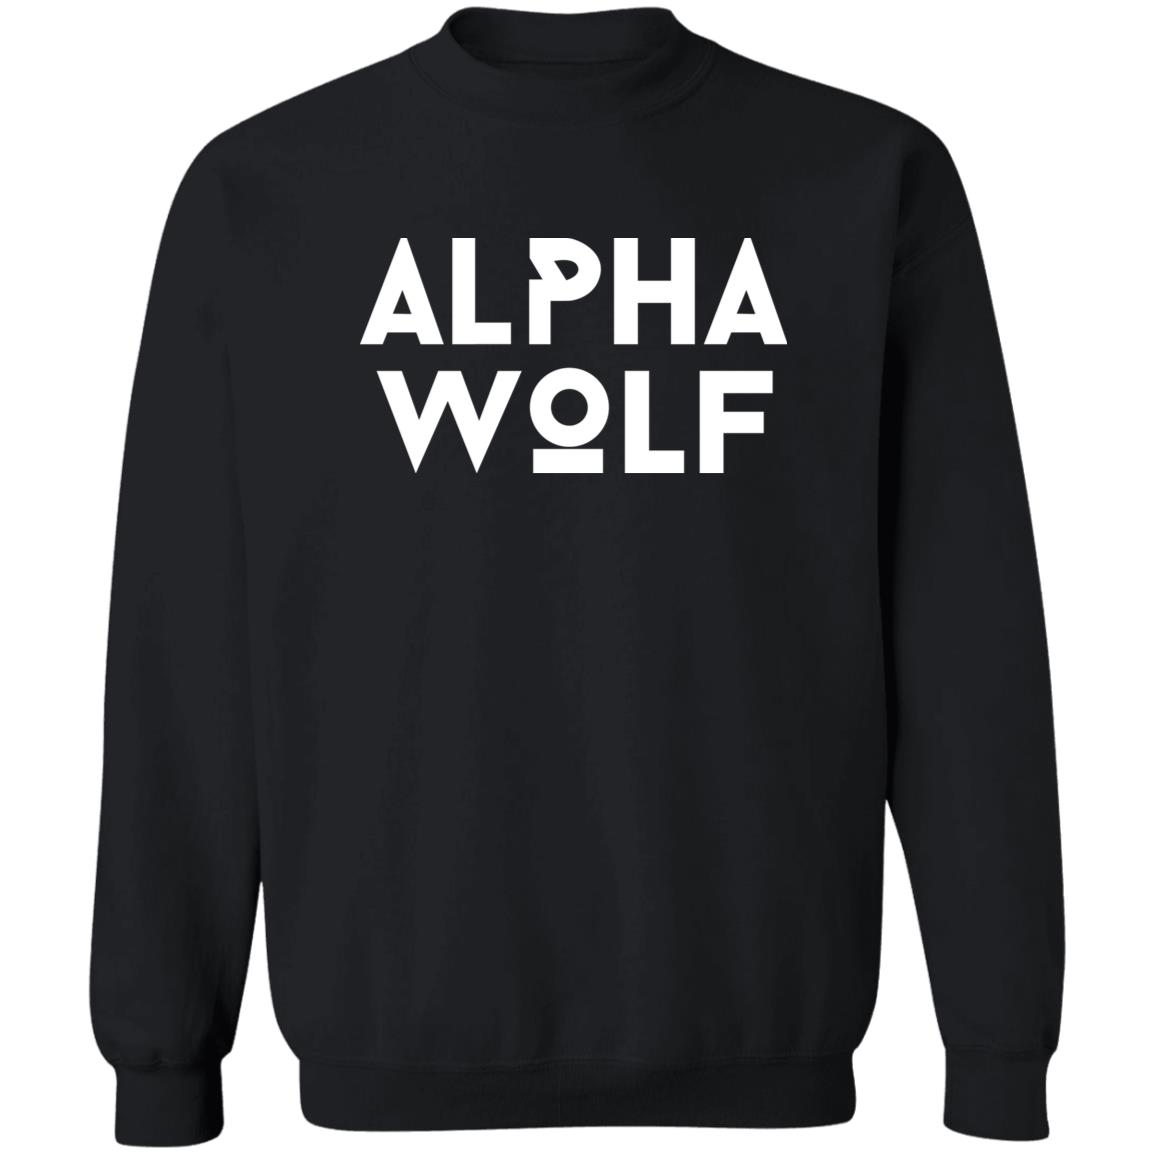 Apha Wolf Shirt 1